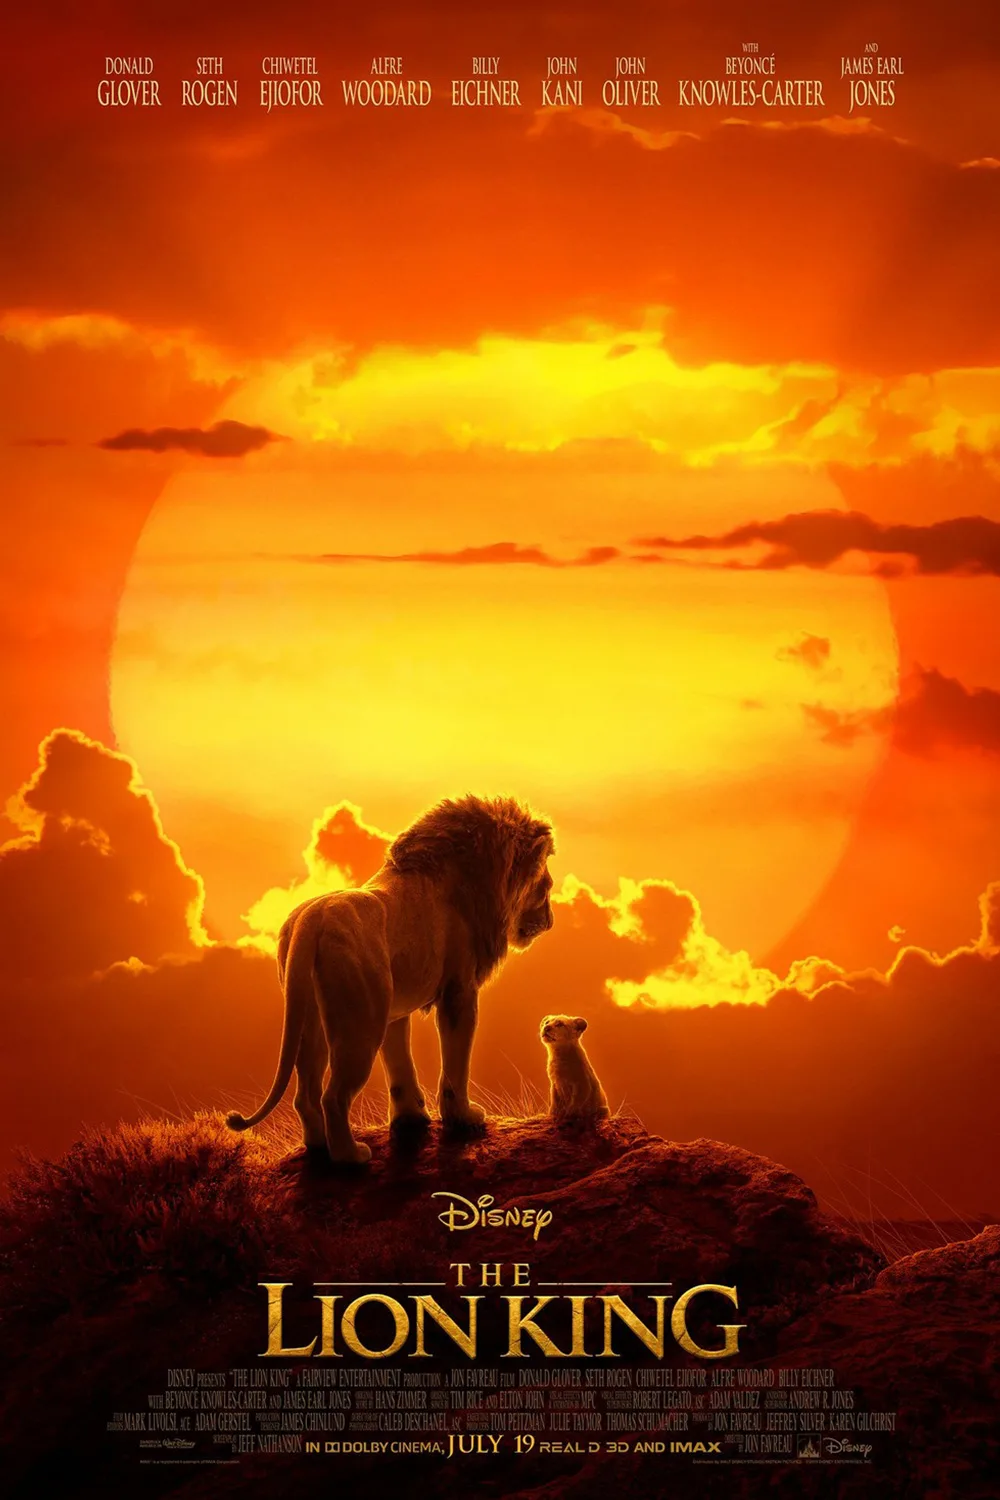 The Lion King movie shown at Marcus Theatres Columbus Ohio